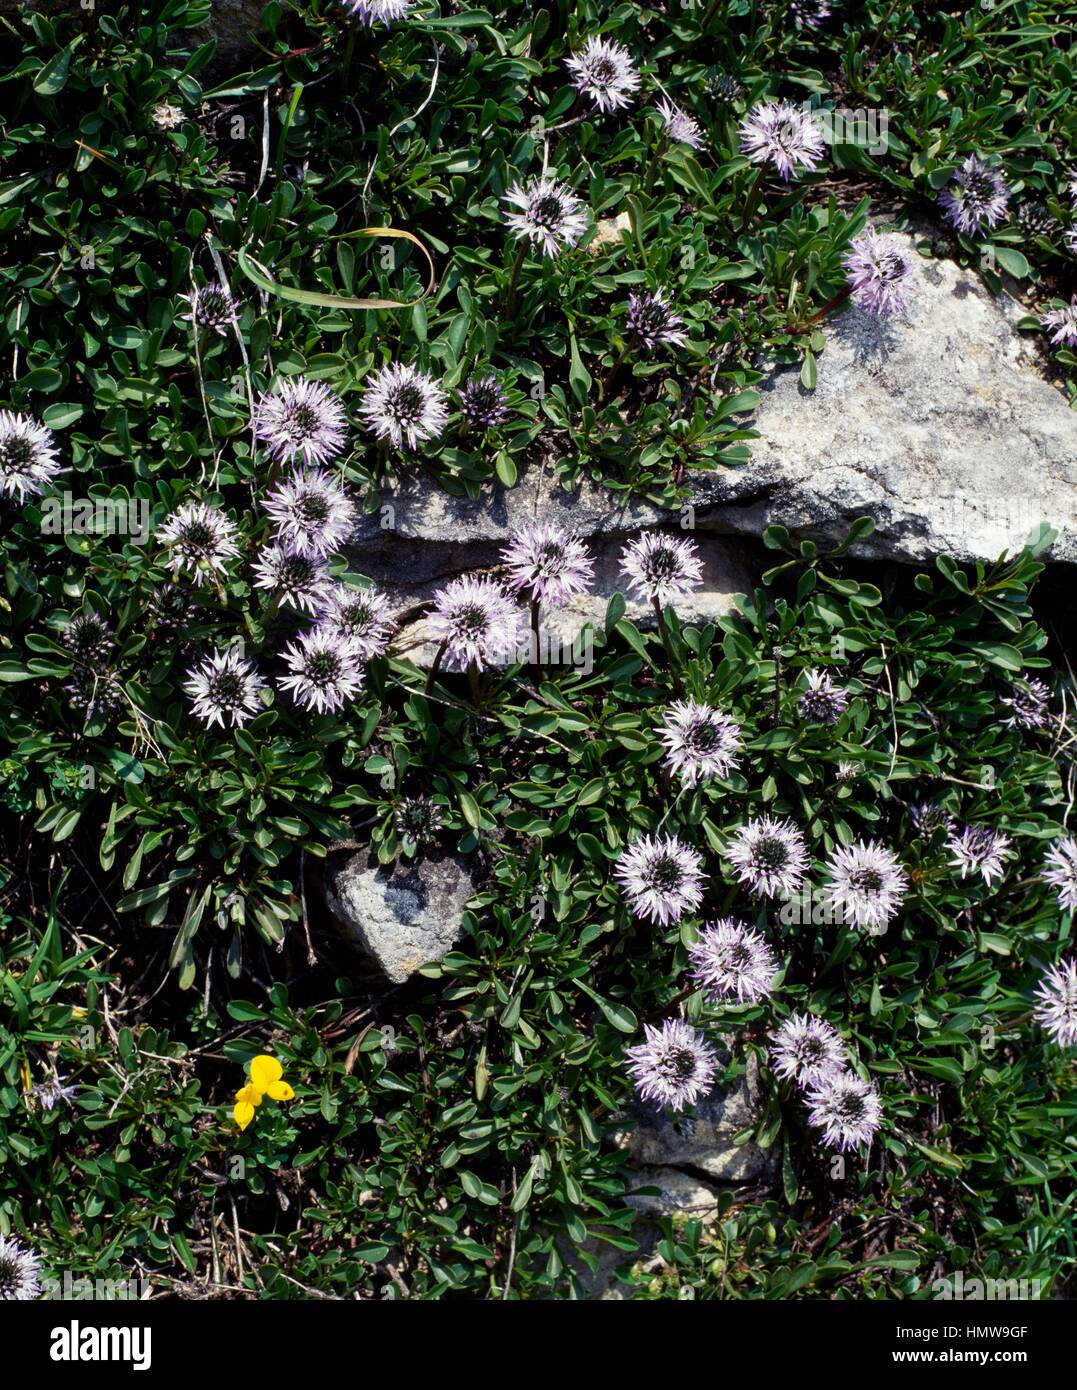 Common globularia (Globularia punctata), Plantaginaceae. Stock Photo